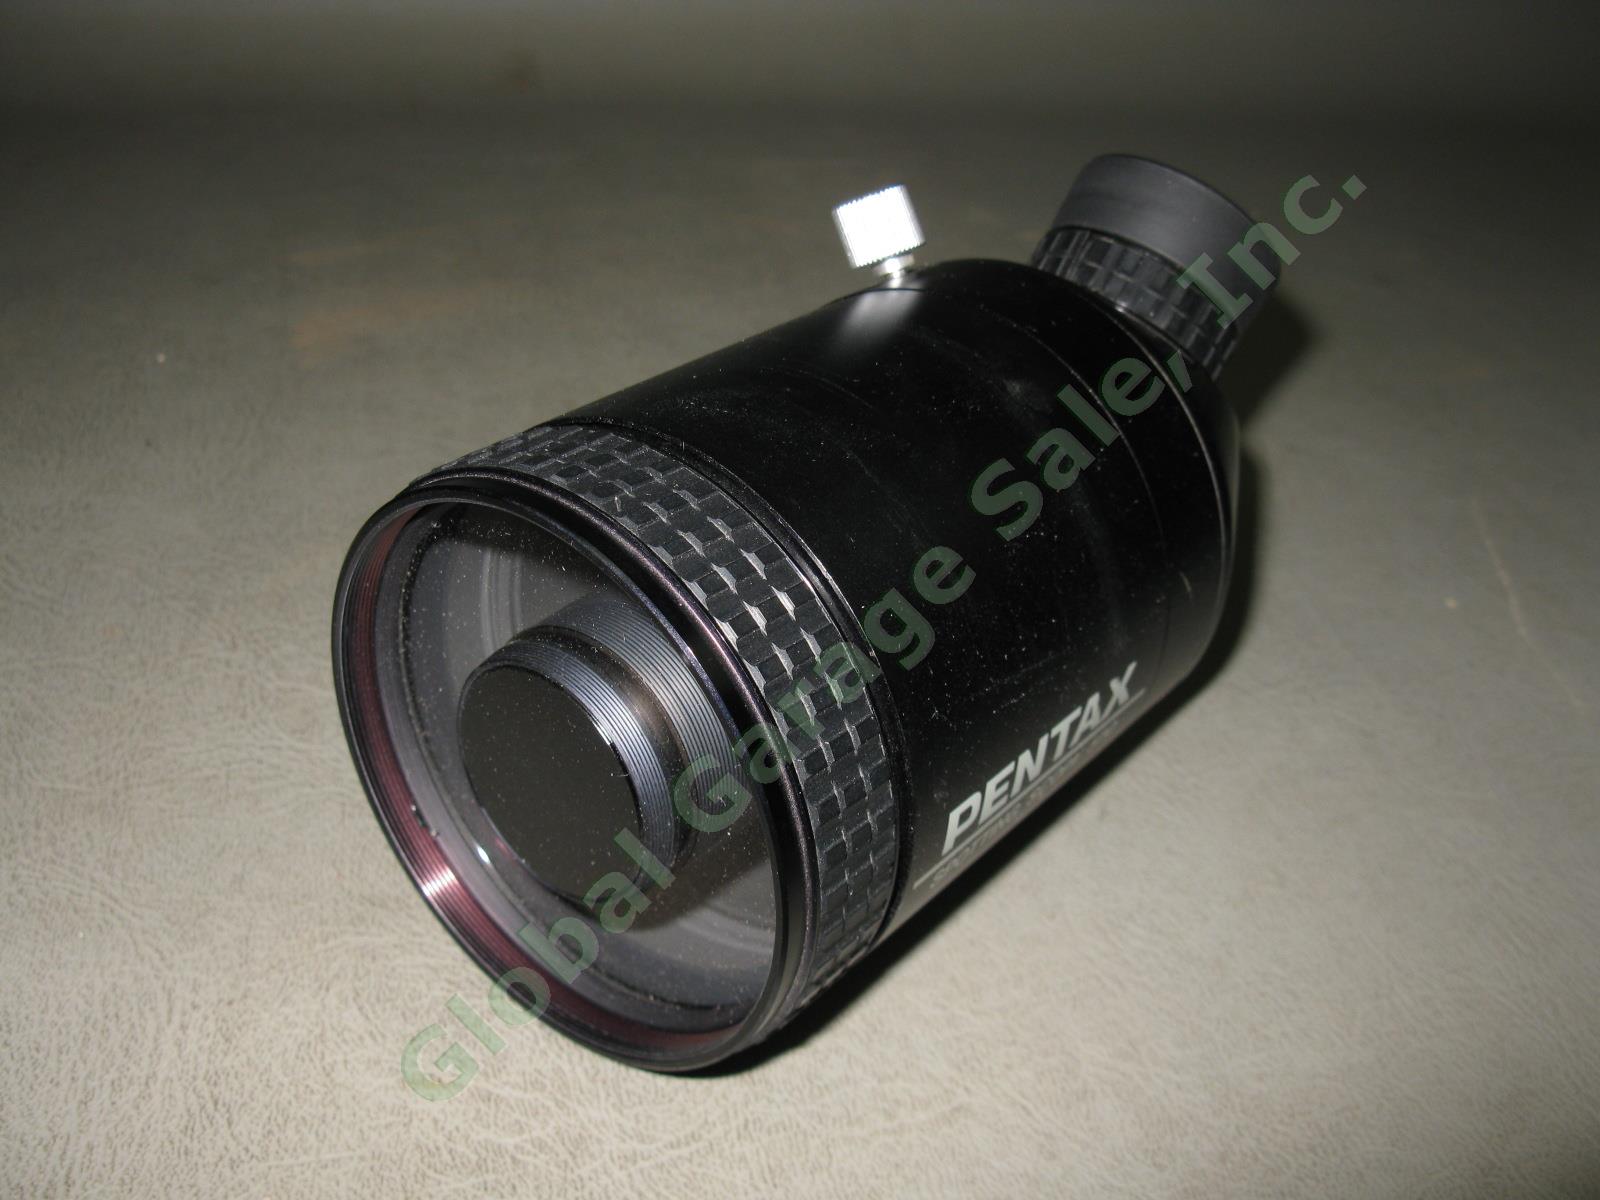 Pentax 500mm Angled Spotting Scope Telephoto Lens W/ Hood Cap Pouch Bag Bundle + 3